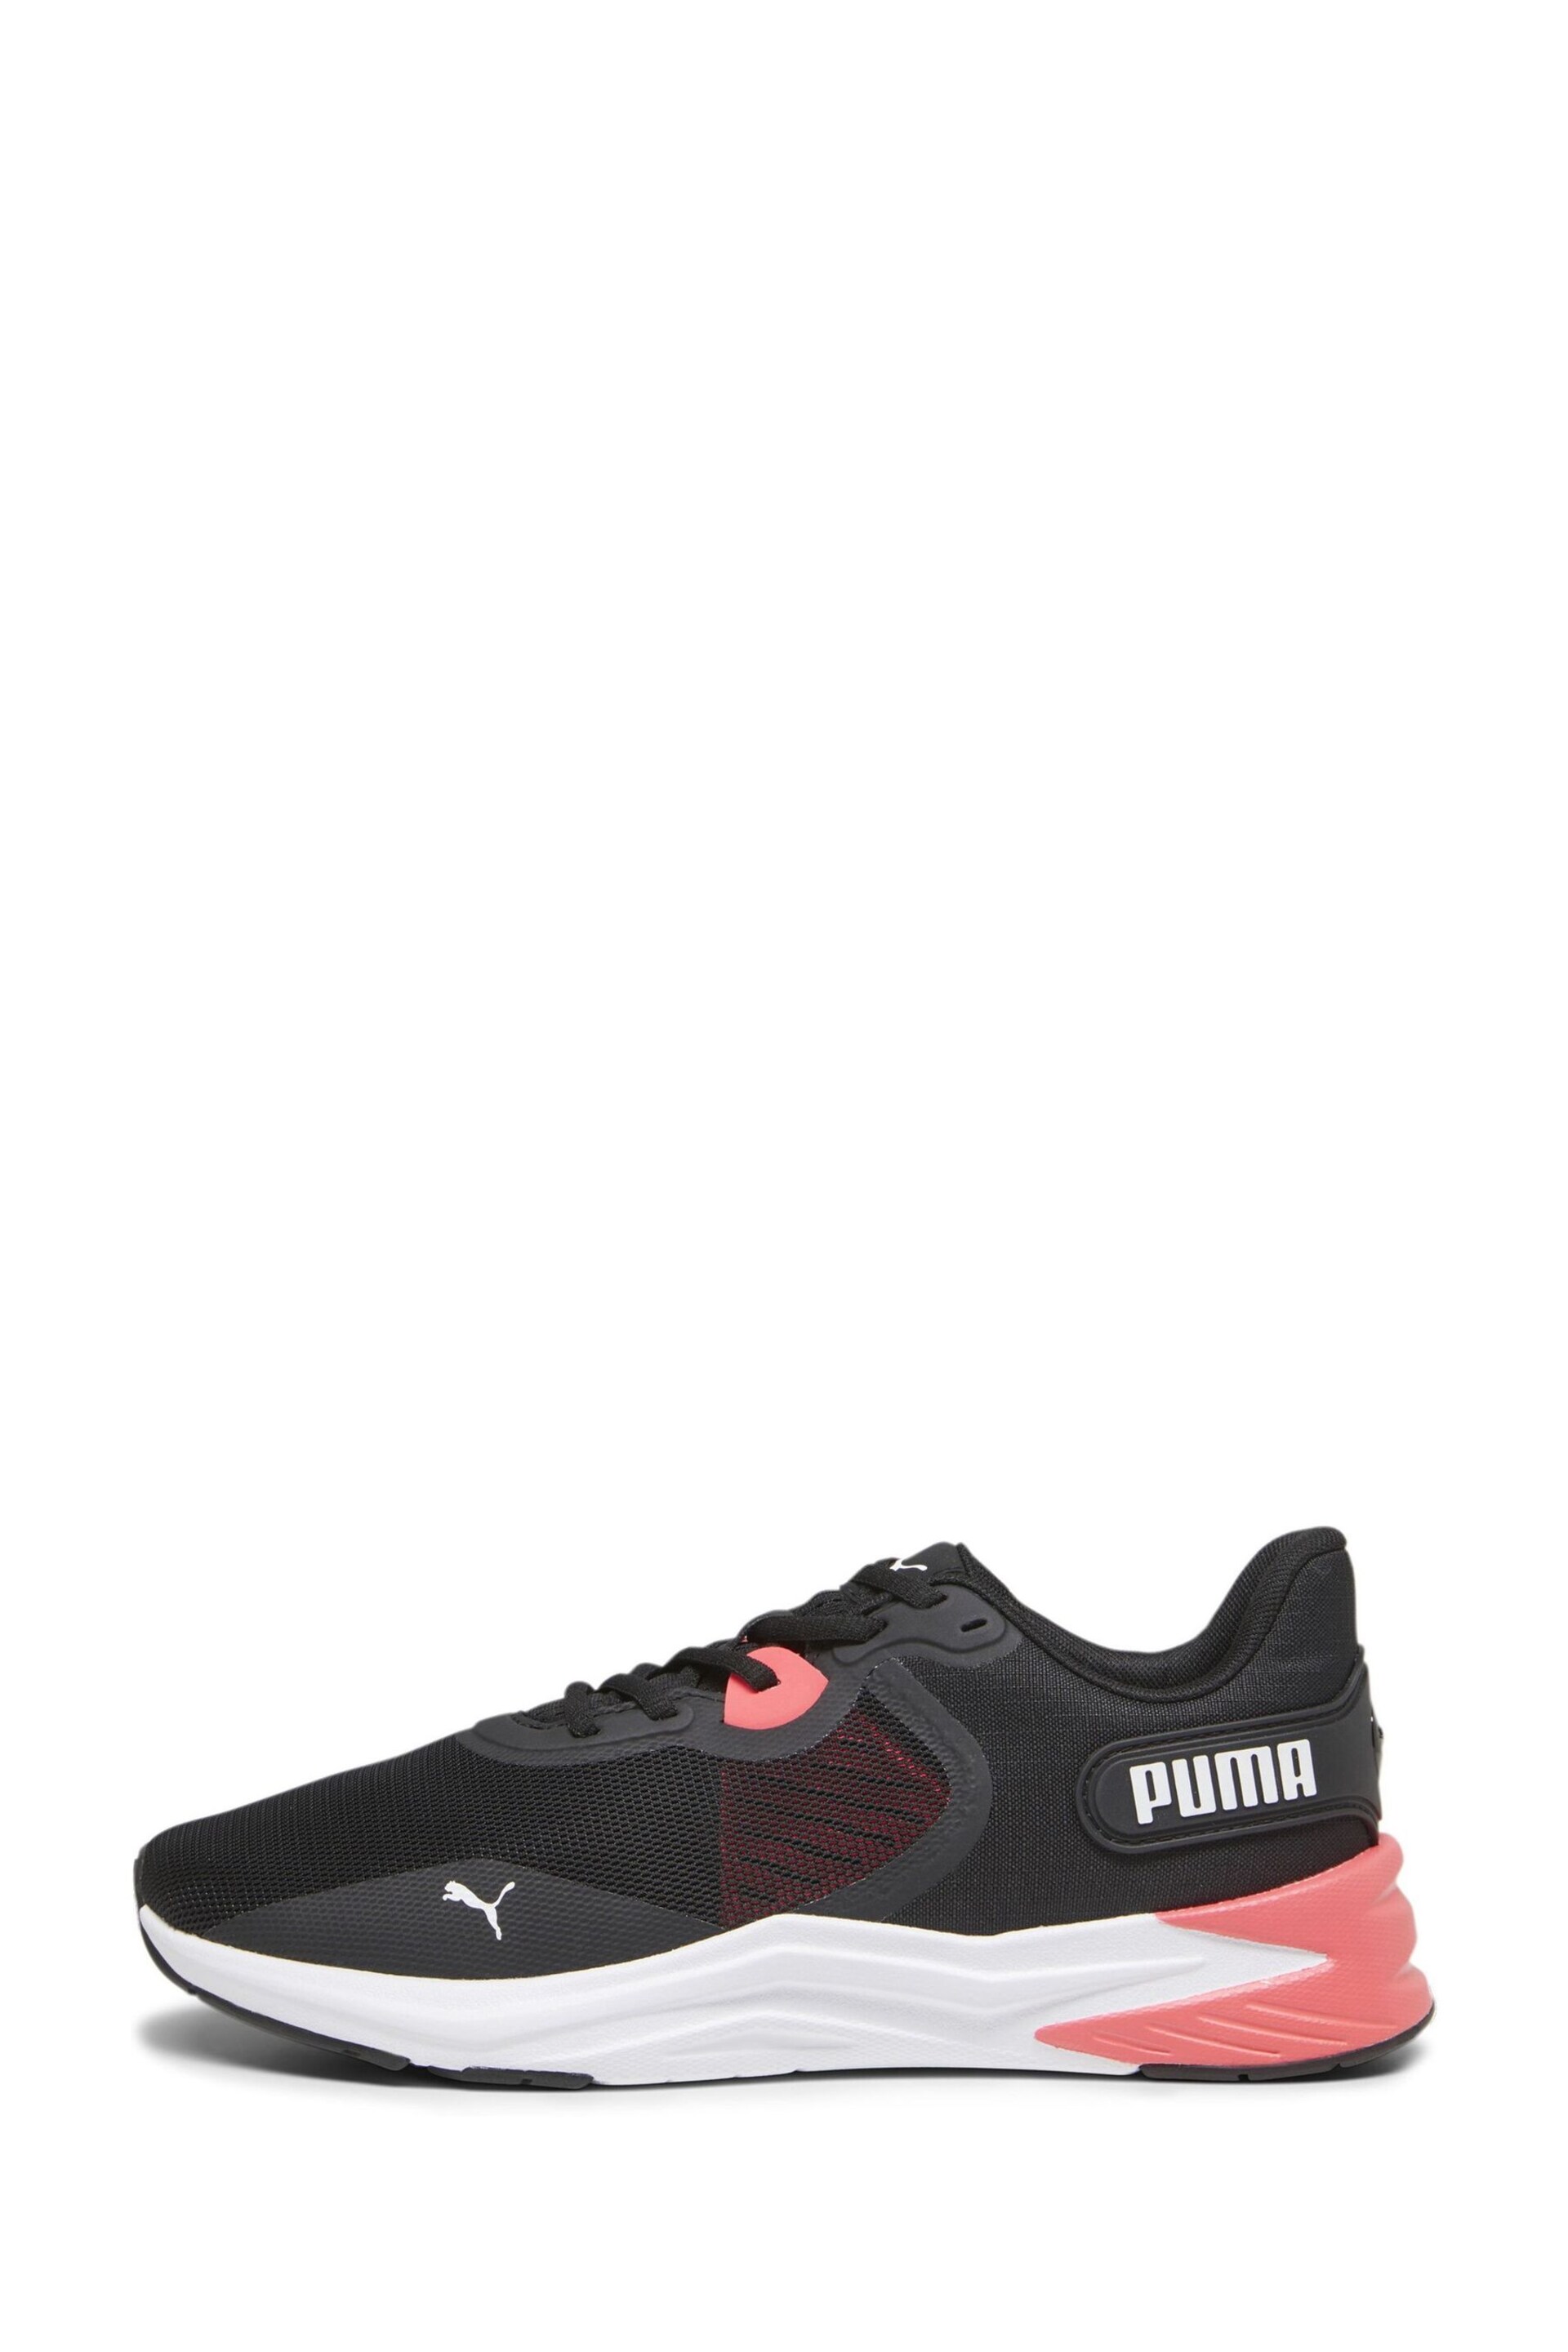 Puma Black Disperse XT 3 Training Shoes - Image 2 of 6